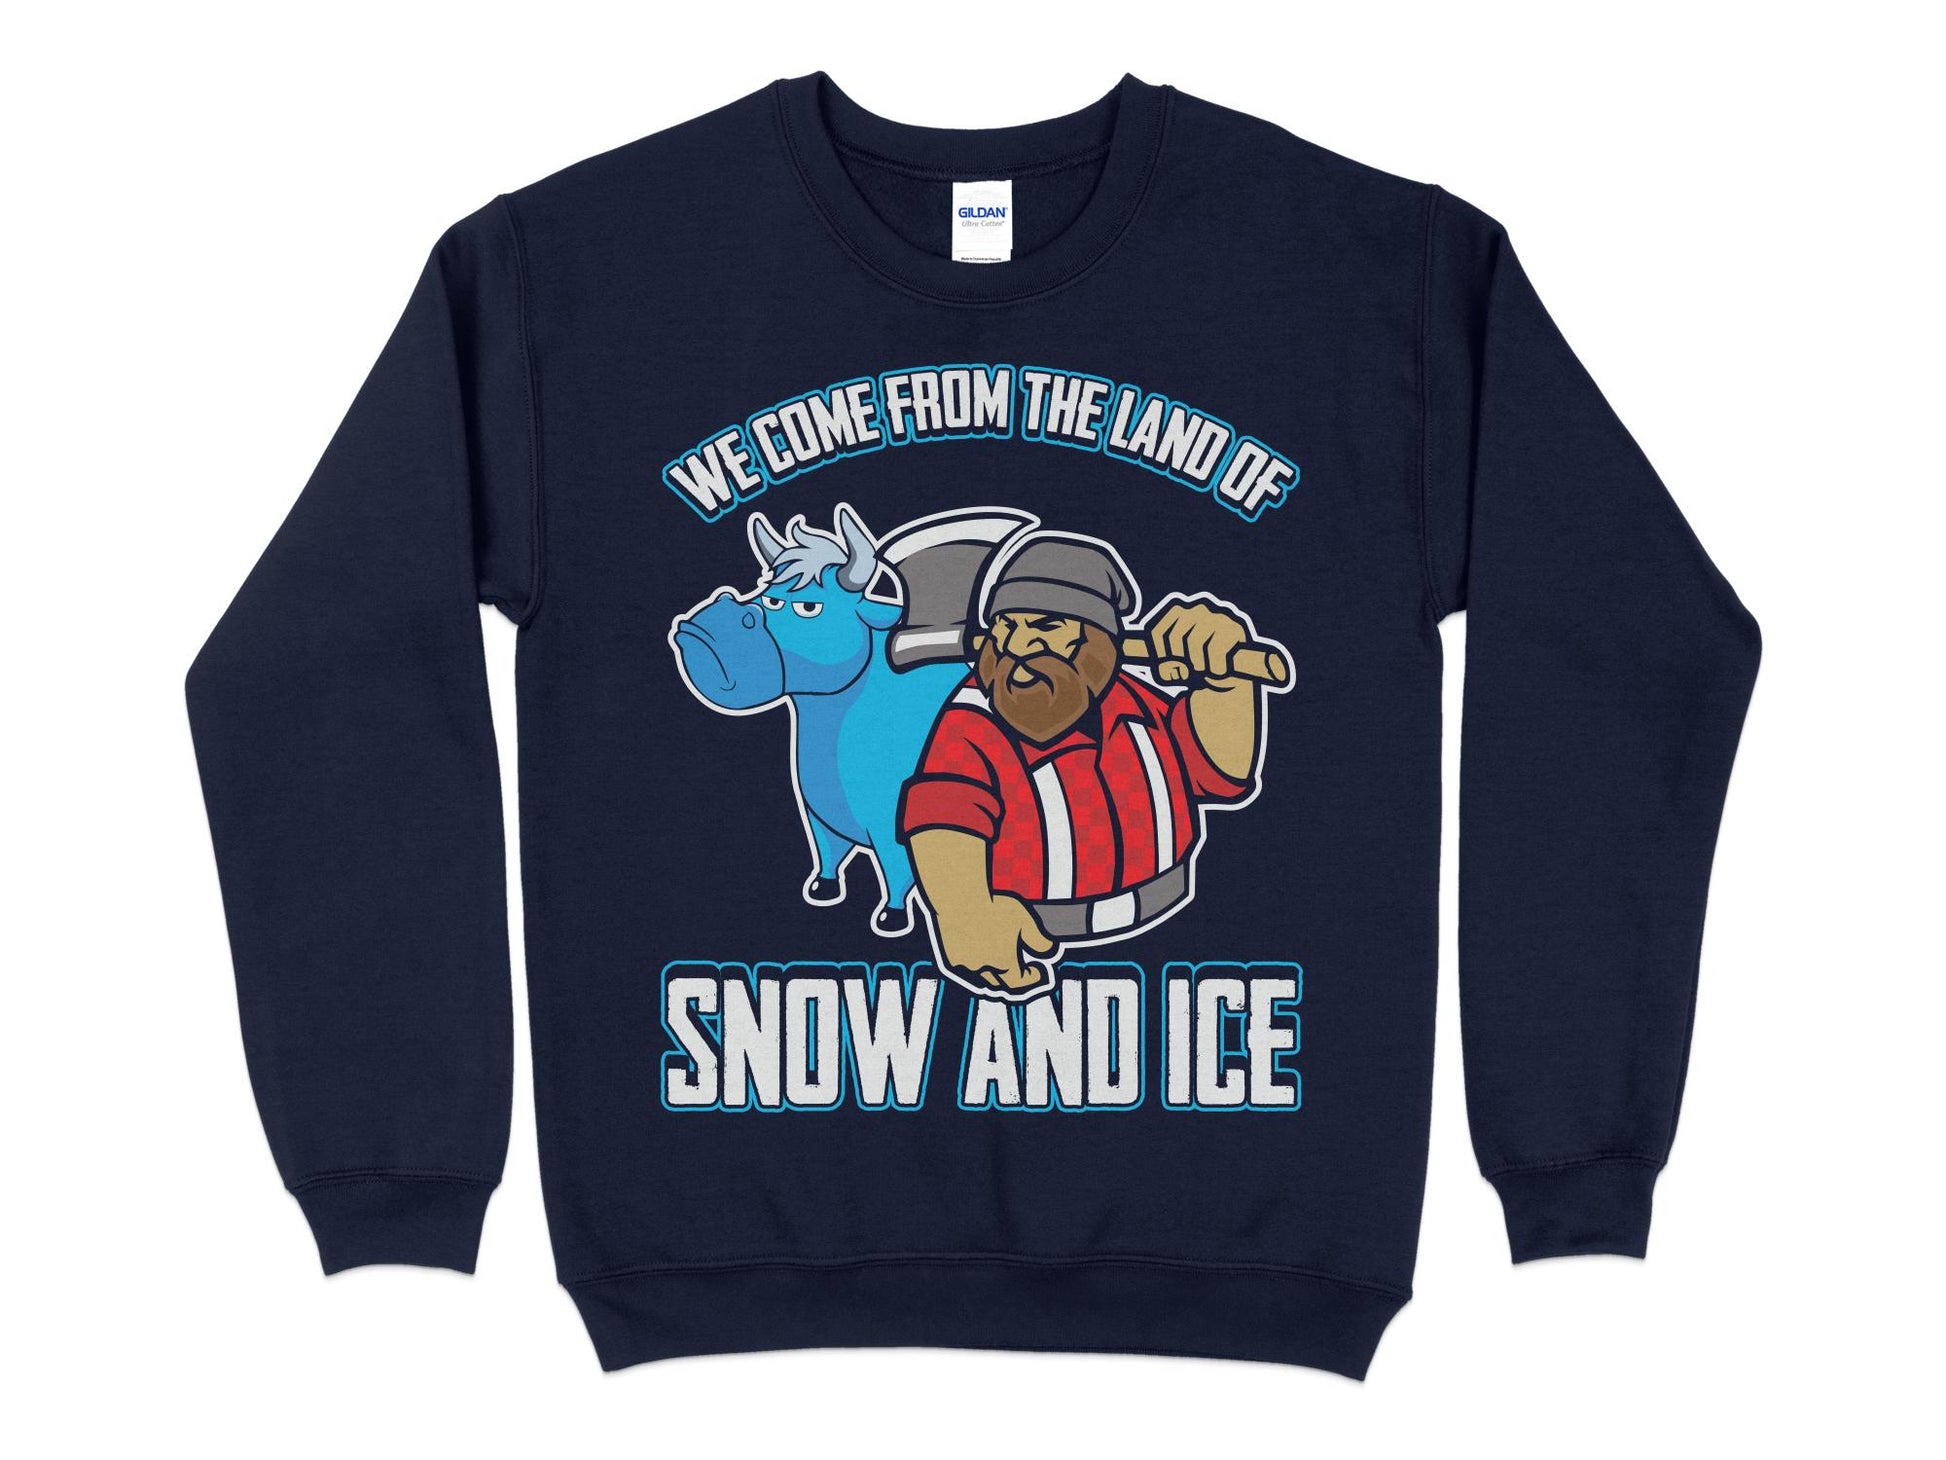 Minnesota Sweatshirt Land of Snow and Ice navy blue